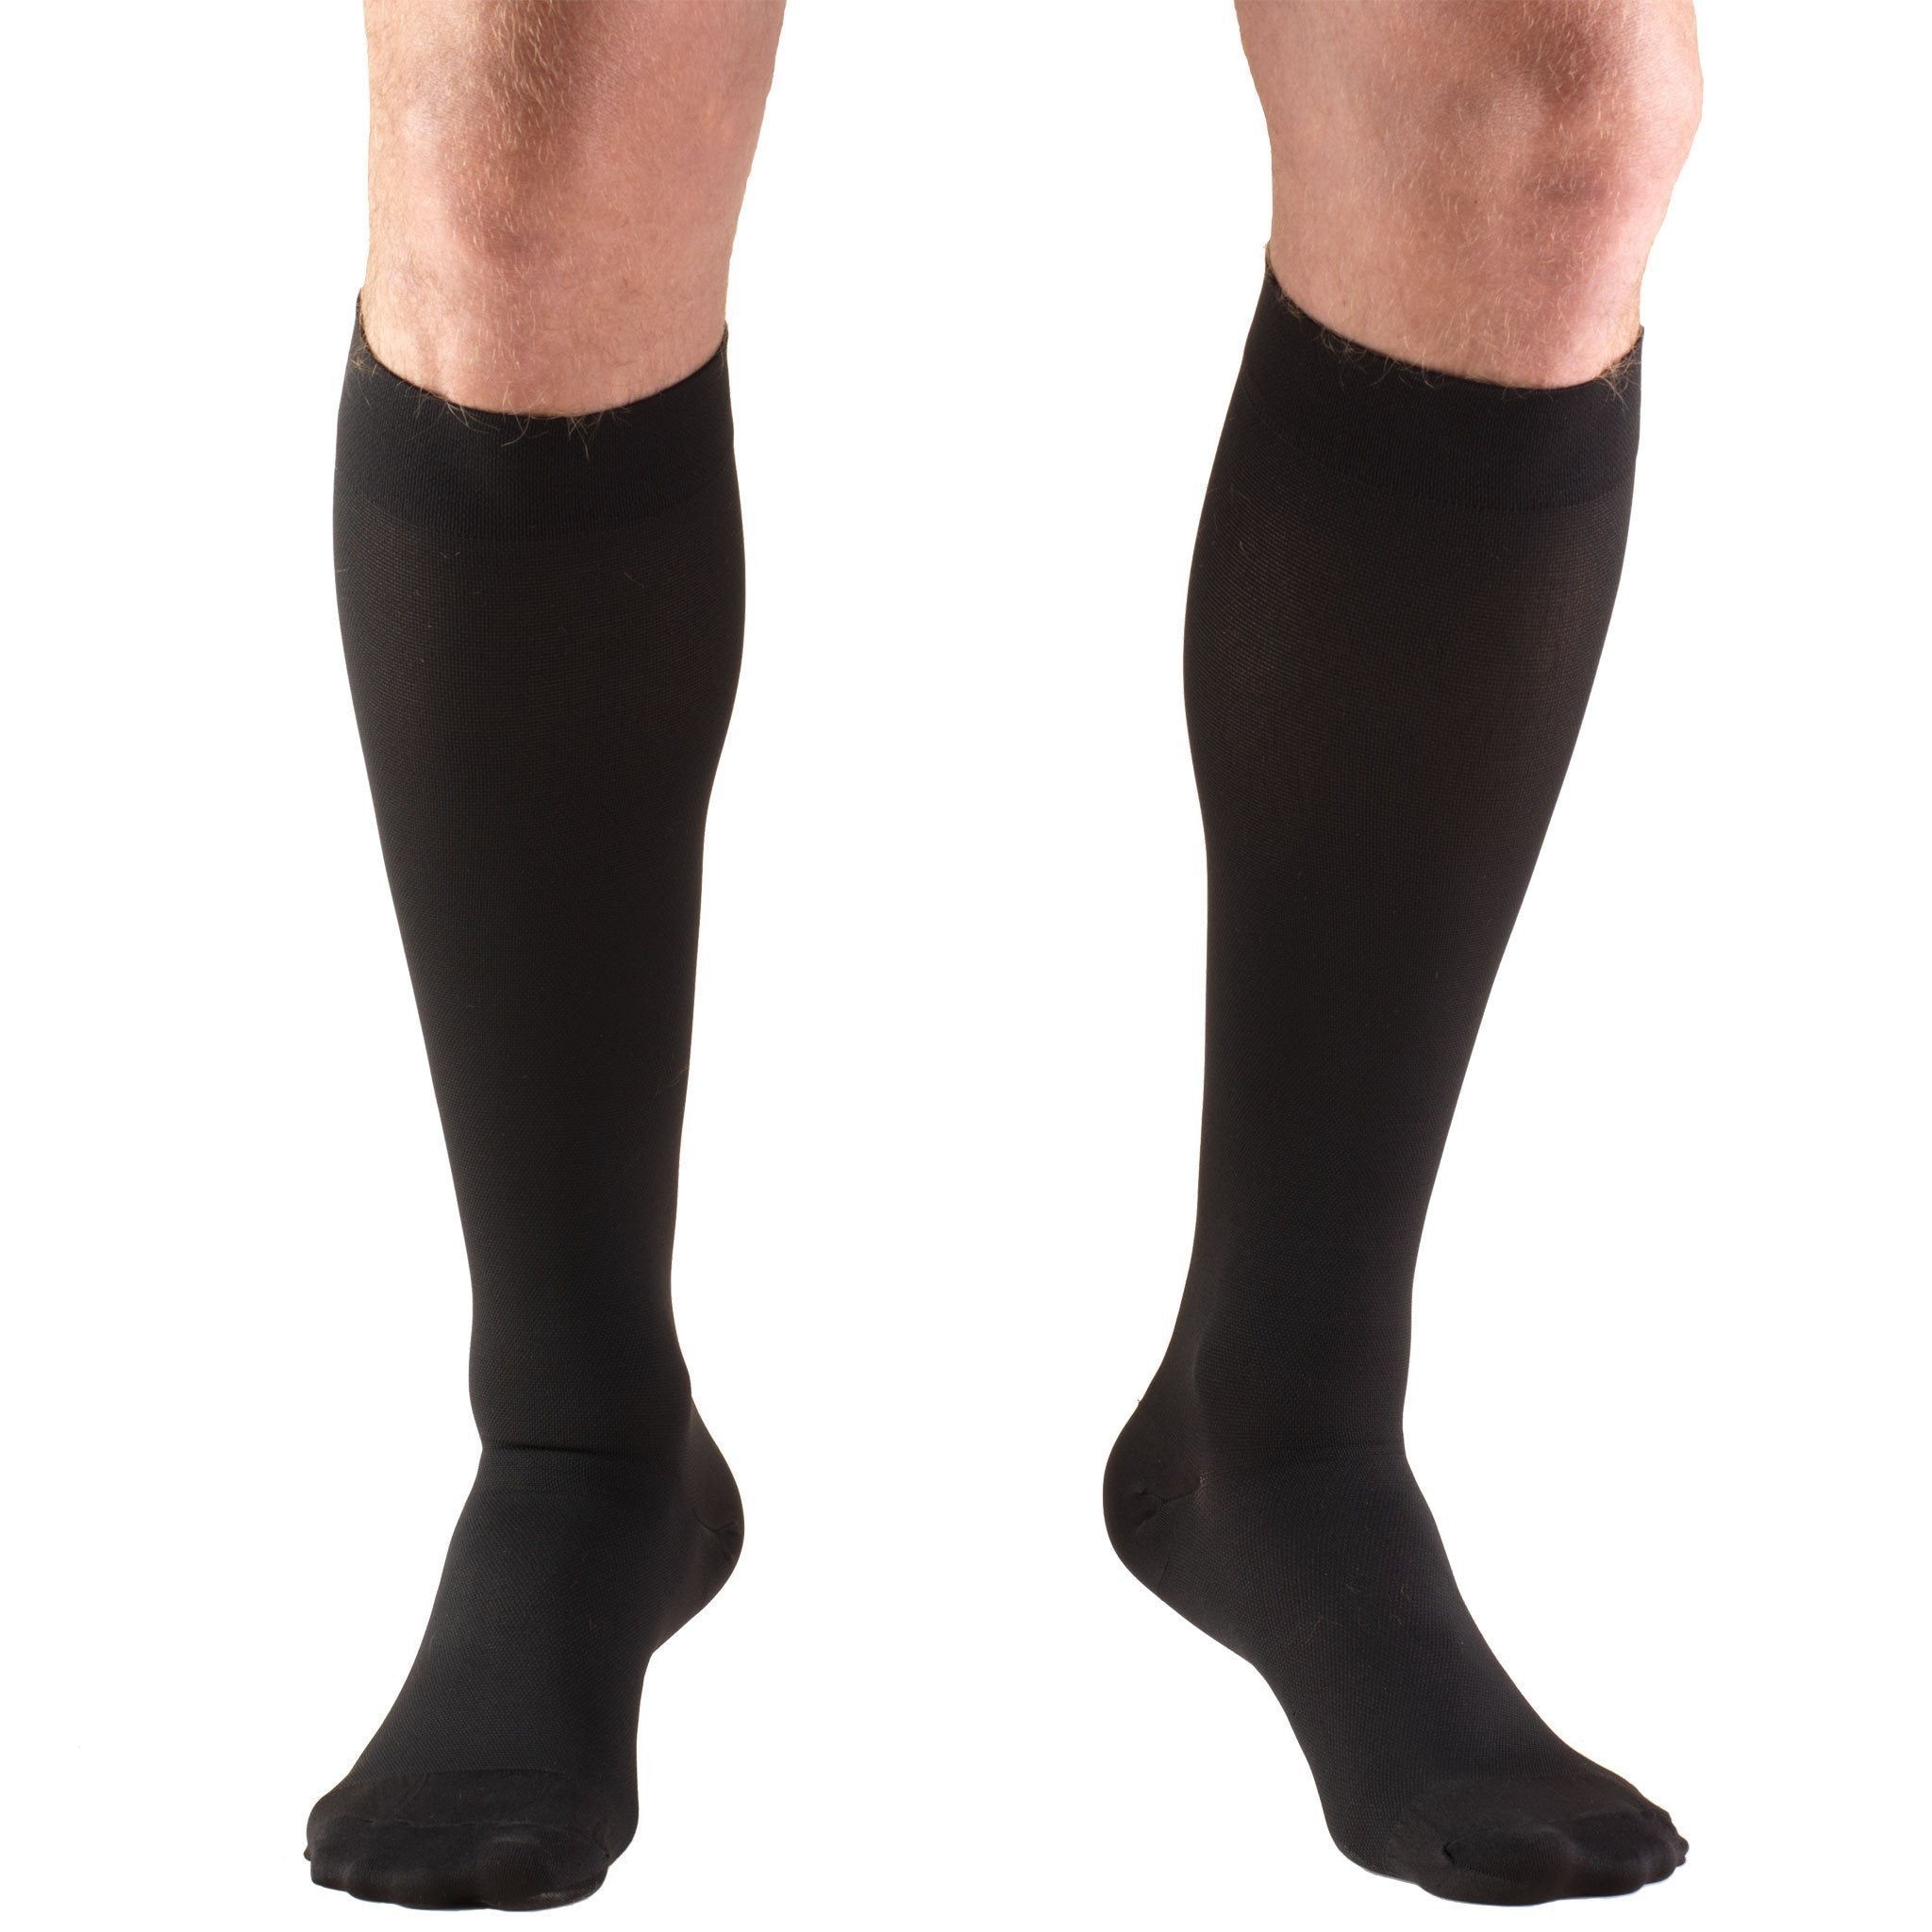 Truform 20-30 mmHg Knee High, Black